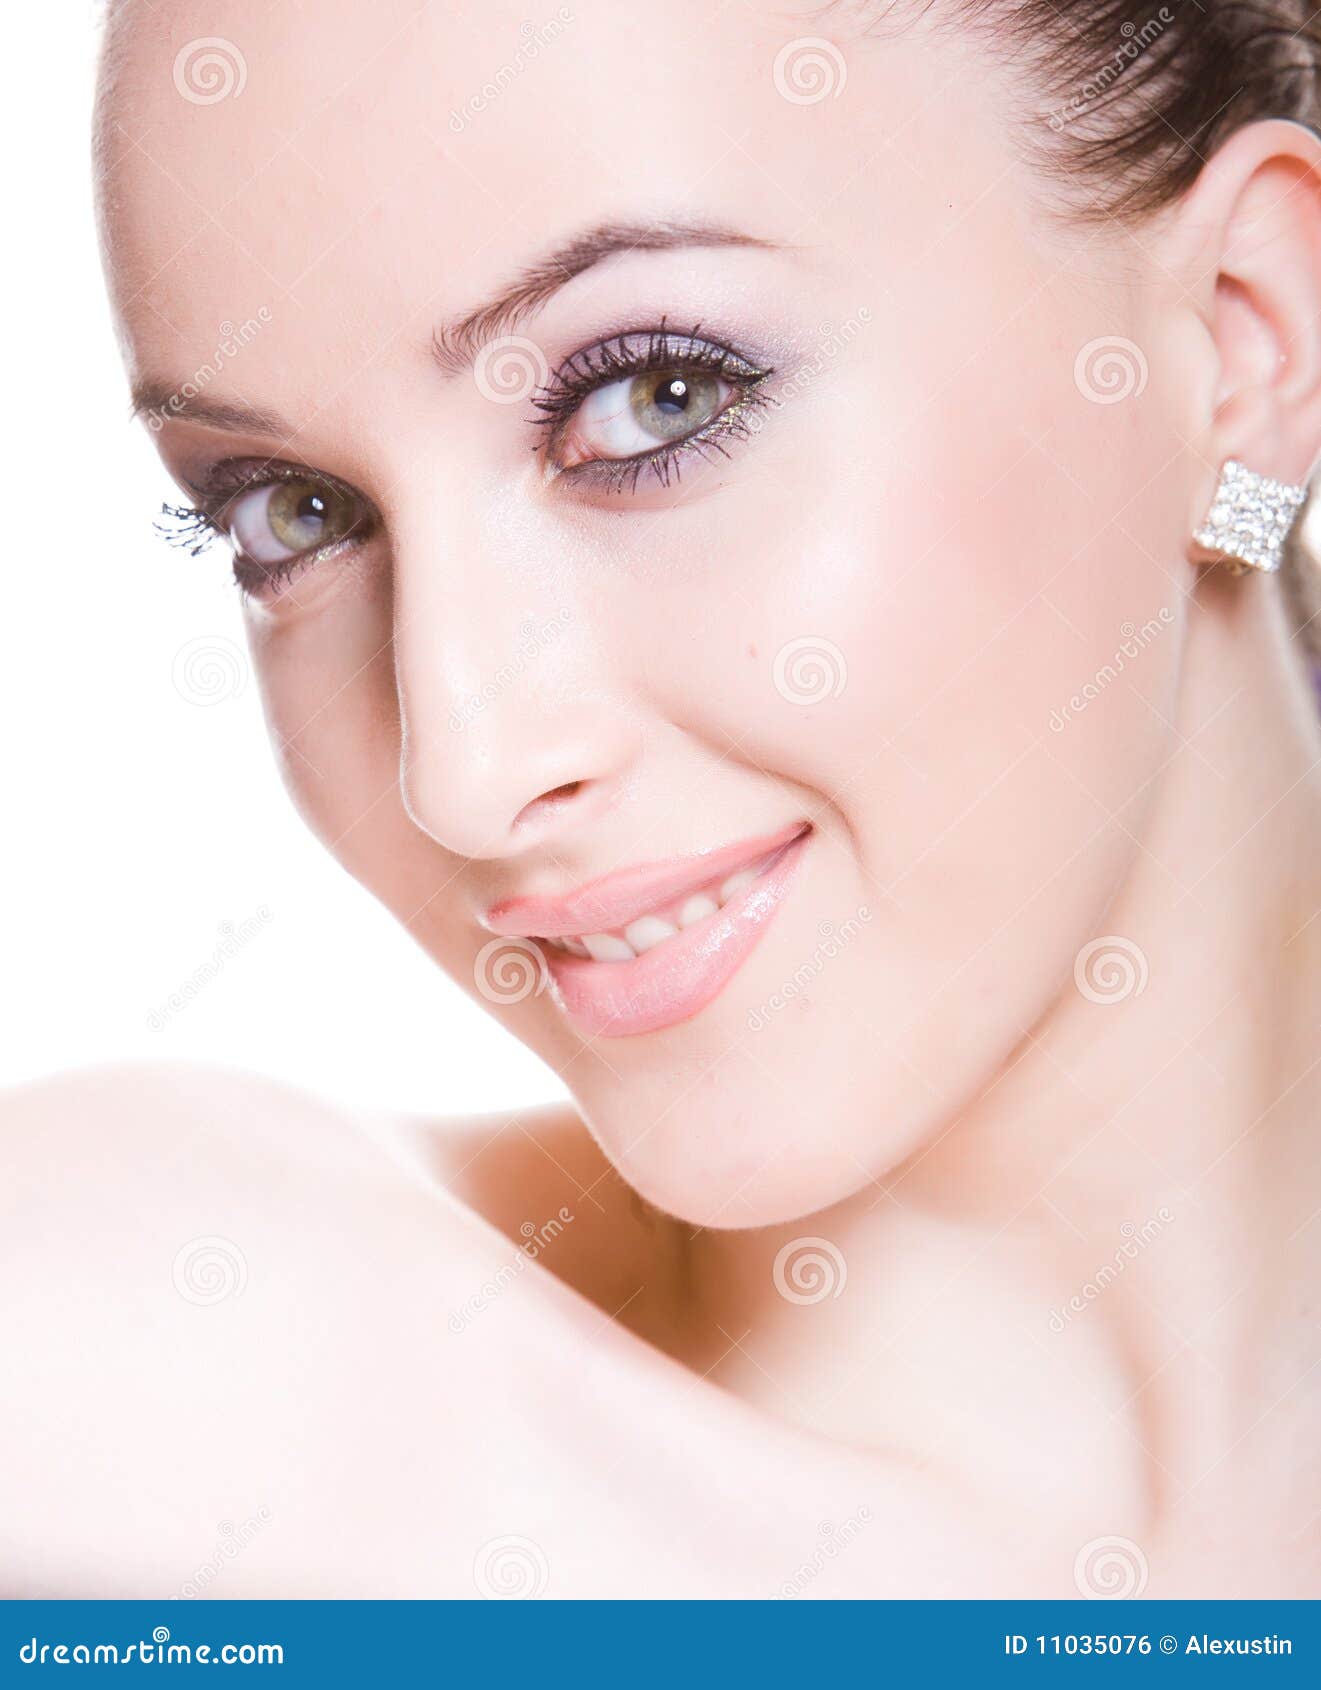 smiling skittish young woman